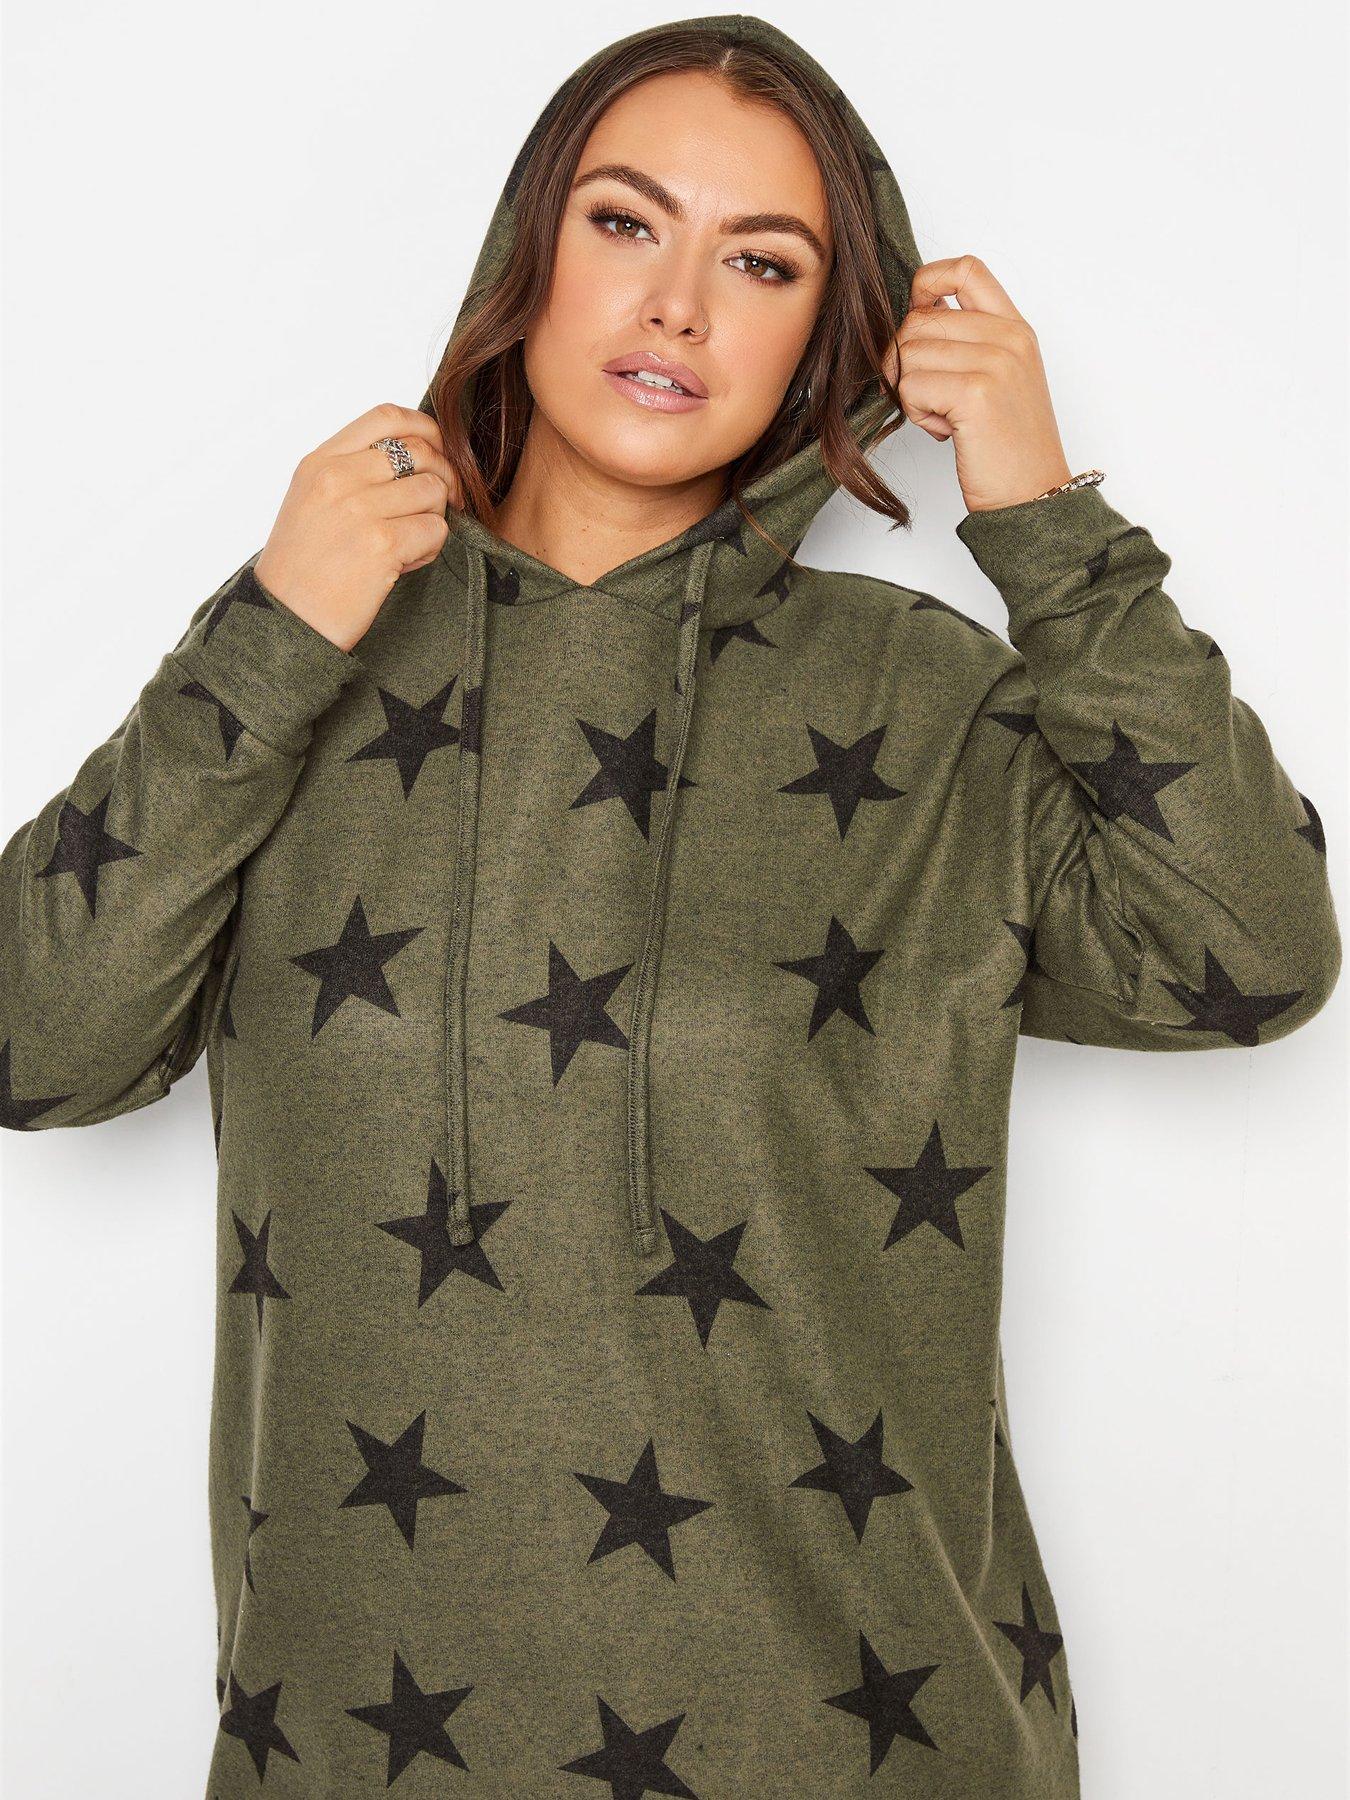 Hoodies & Sweatshirts Brushed Jersey All over print Star Hoodie. Khaki